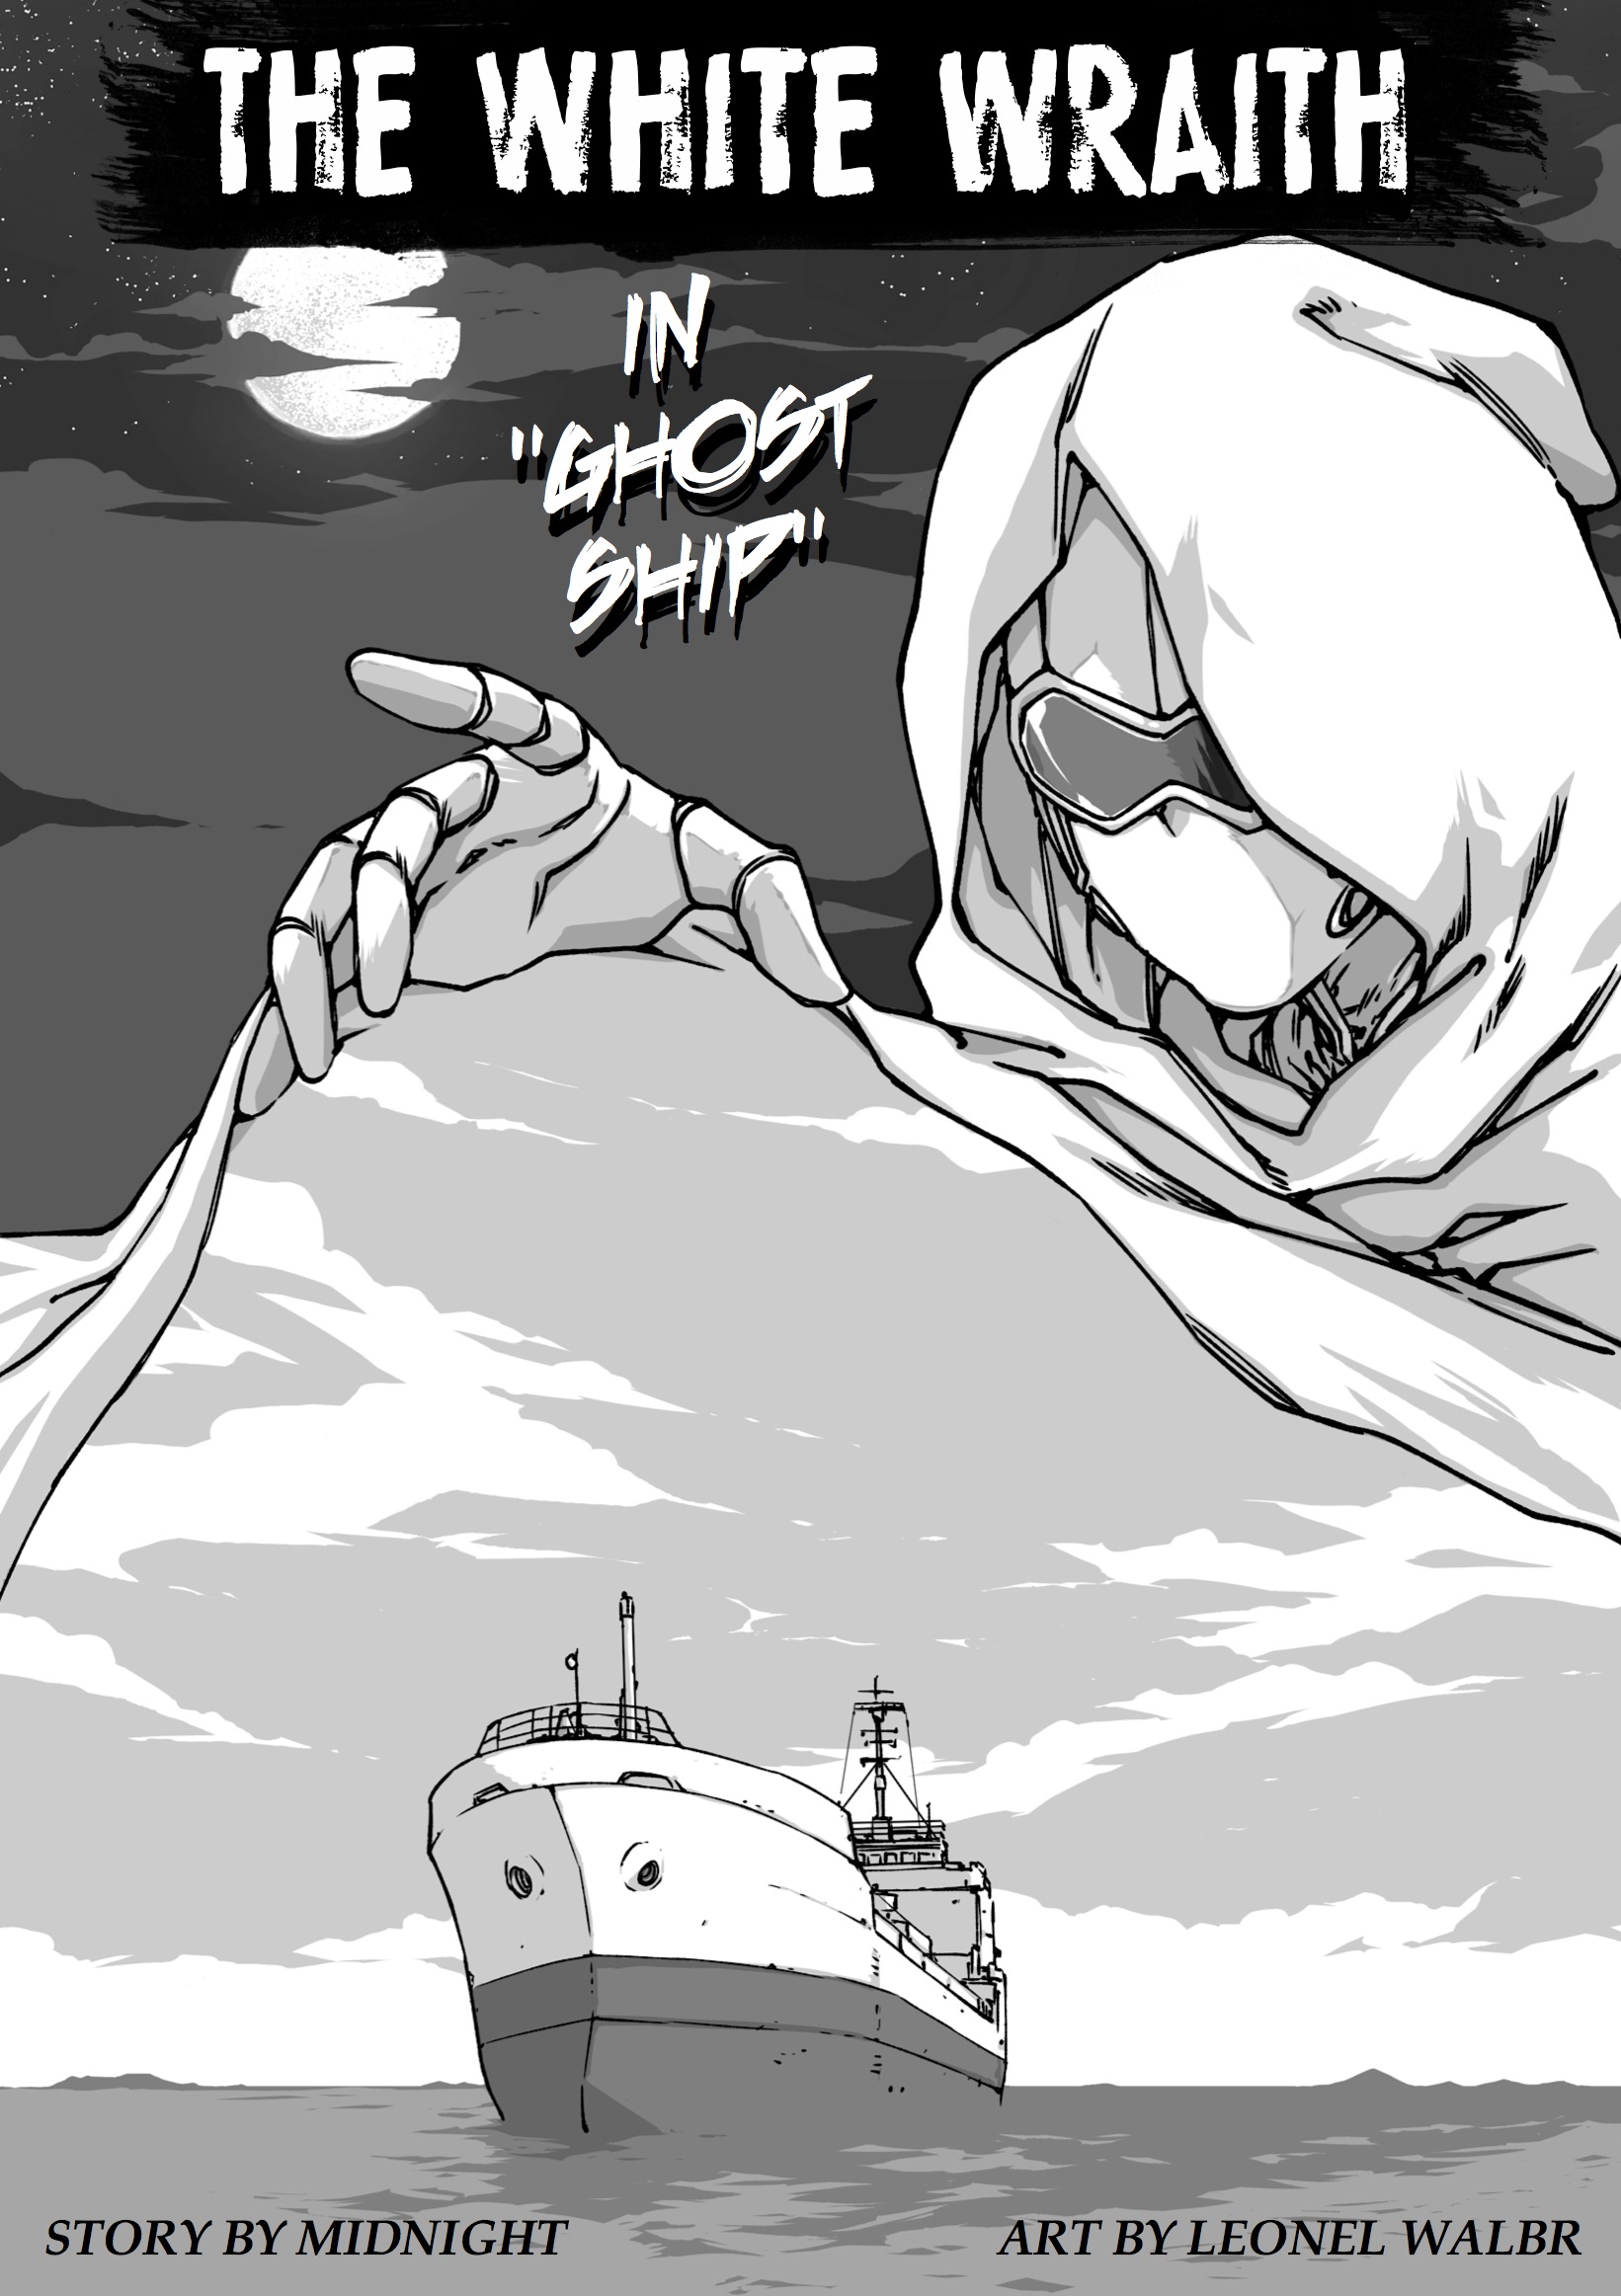 The White Wraith, Ghost Ship